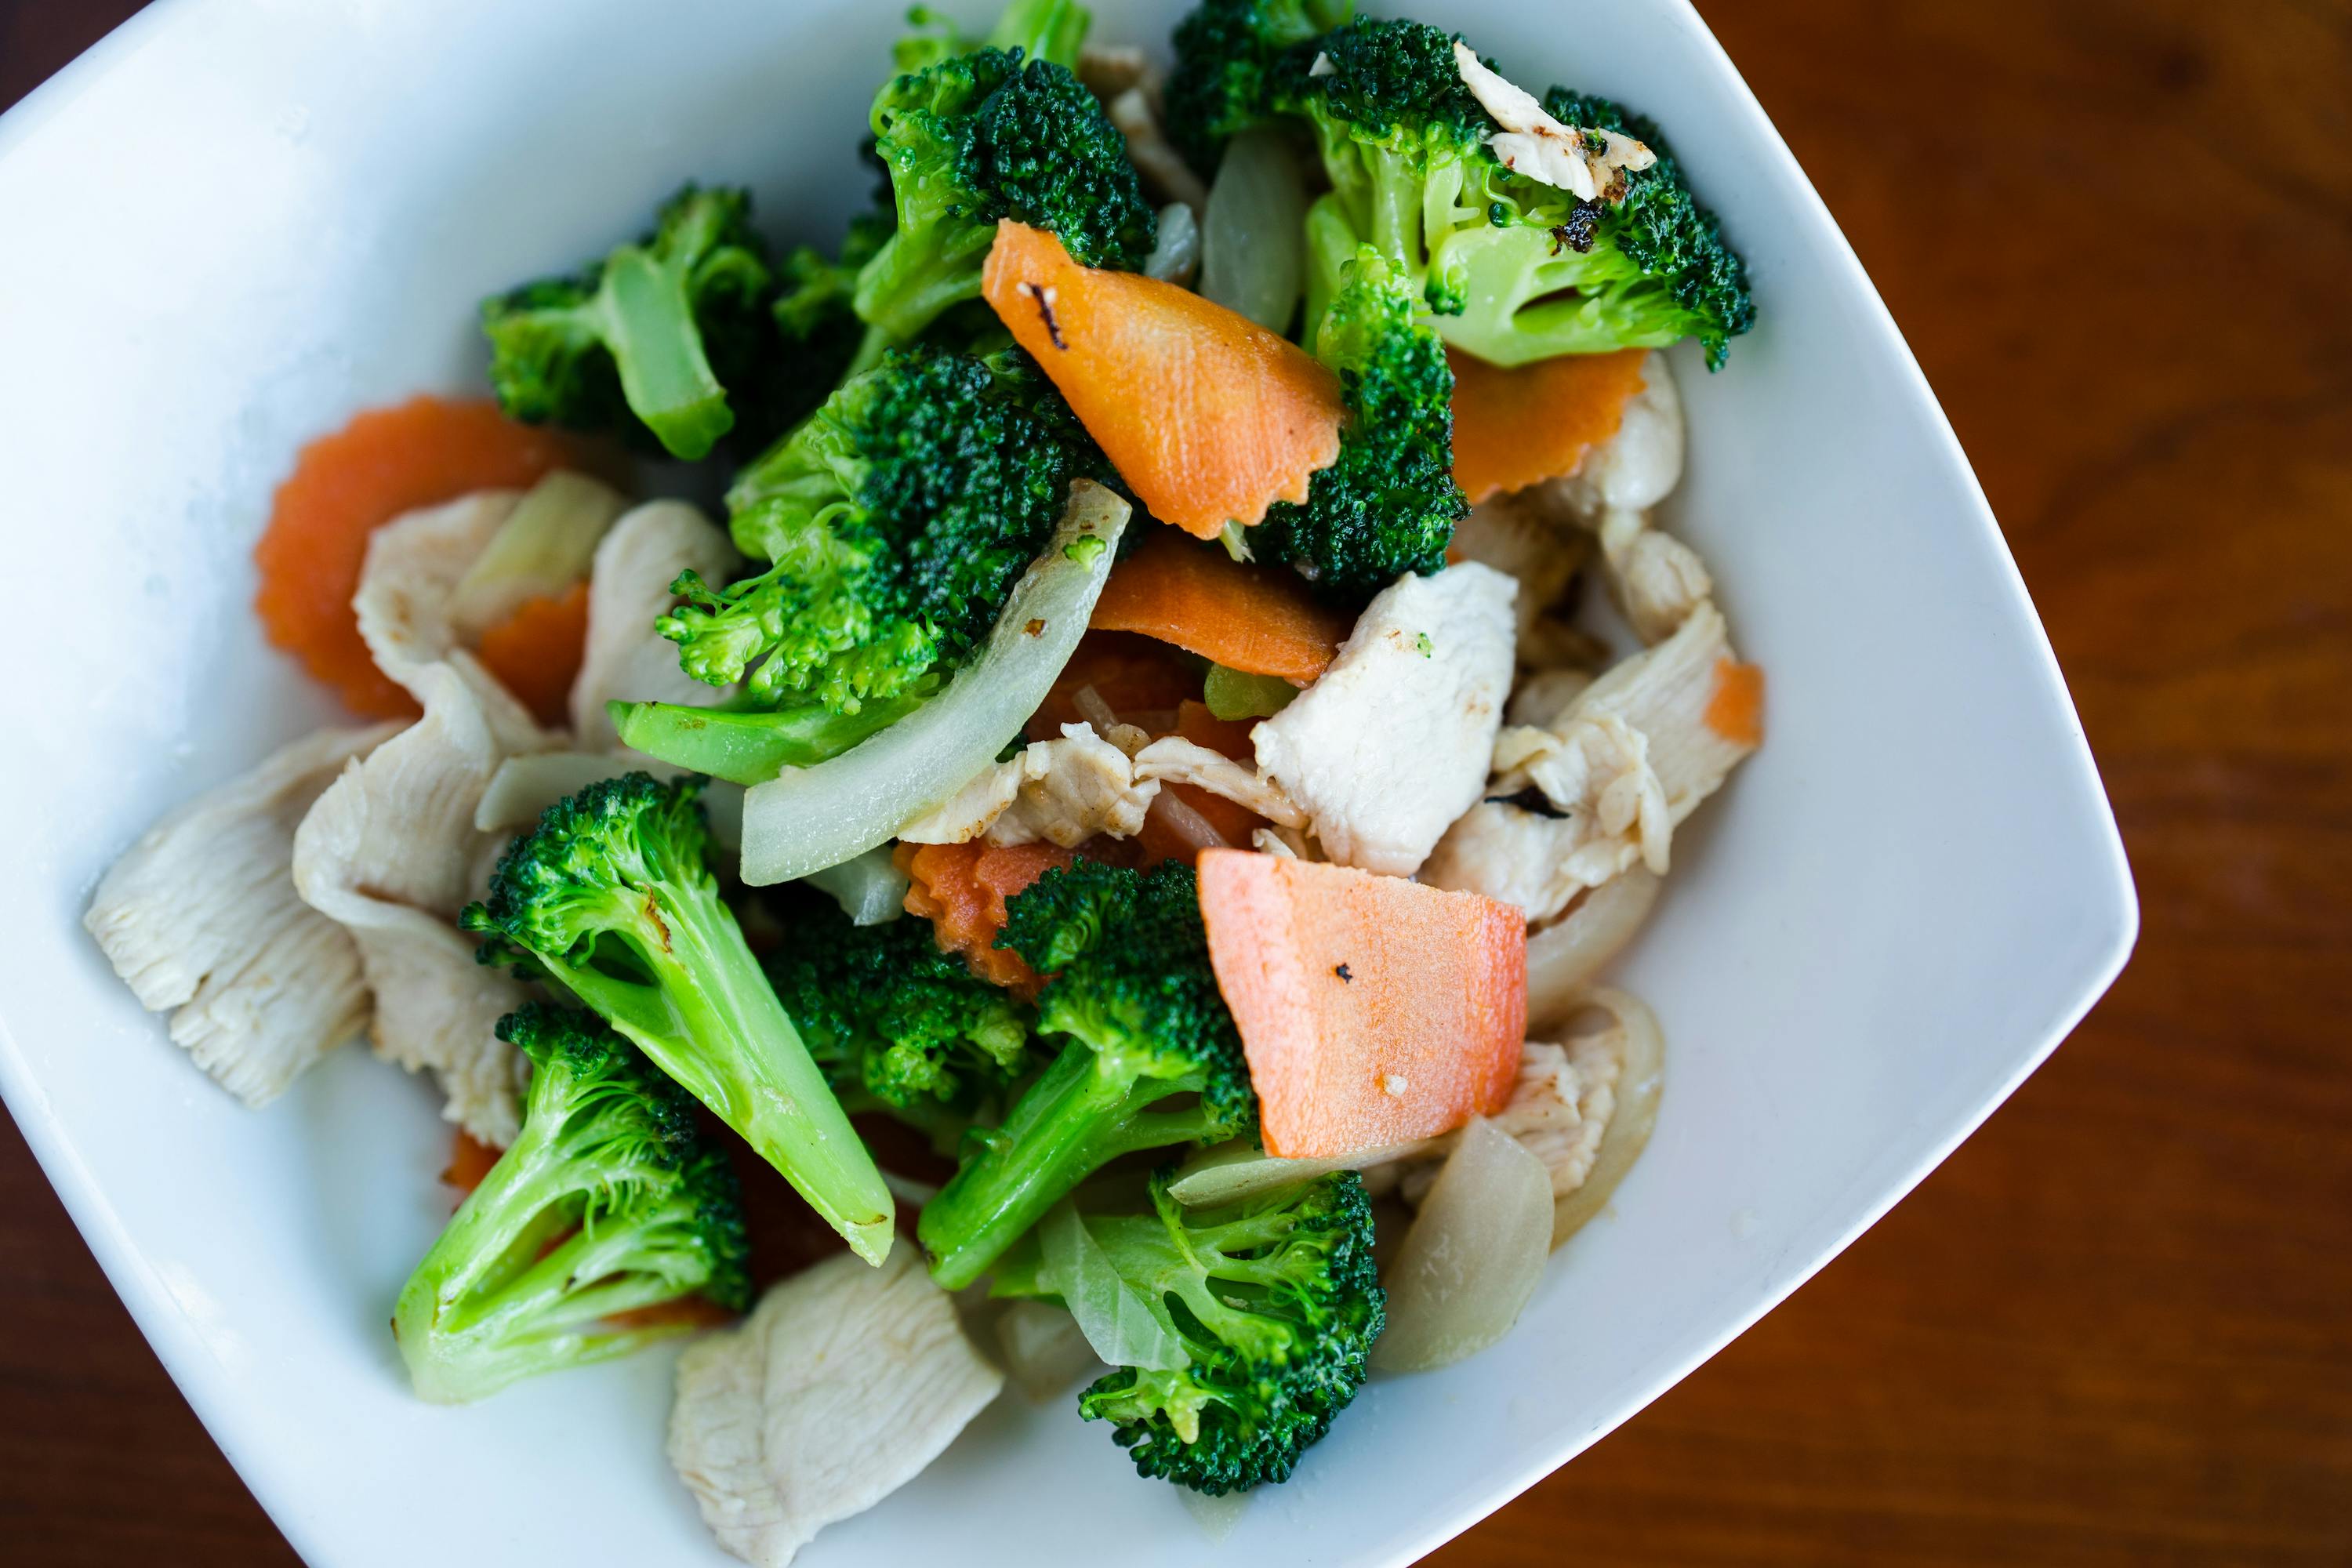 Broccoli Delight from City Thai Cuisine in Portland, OR